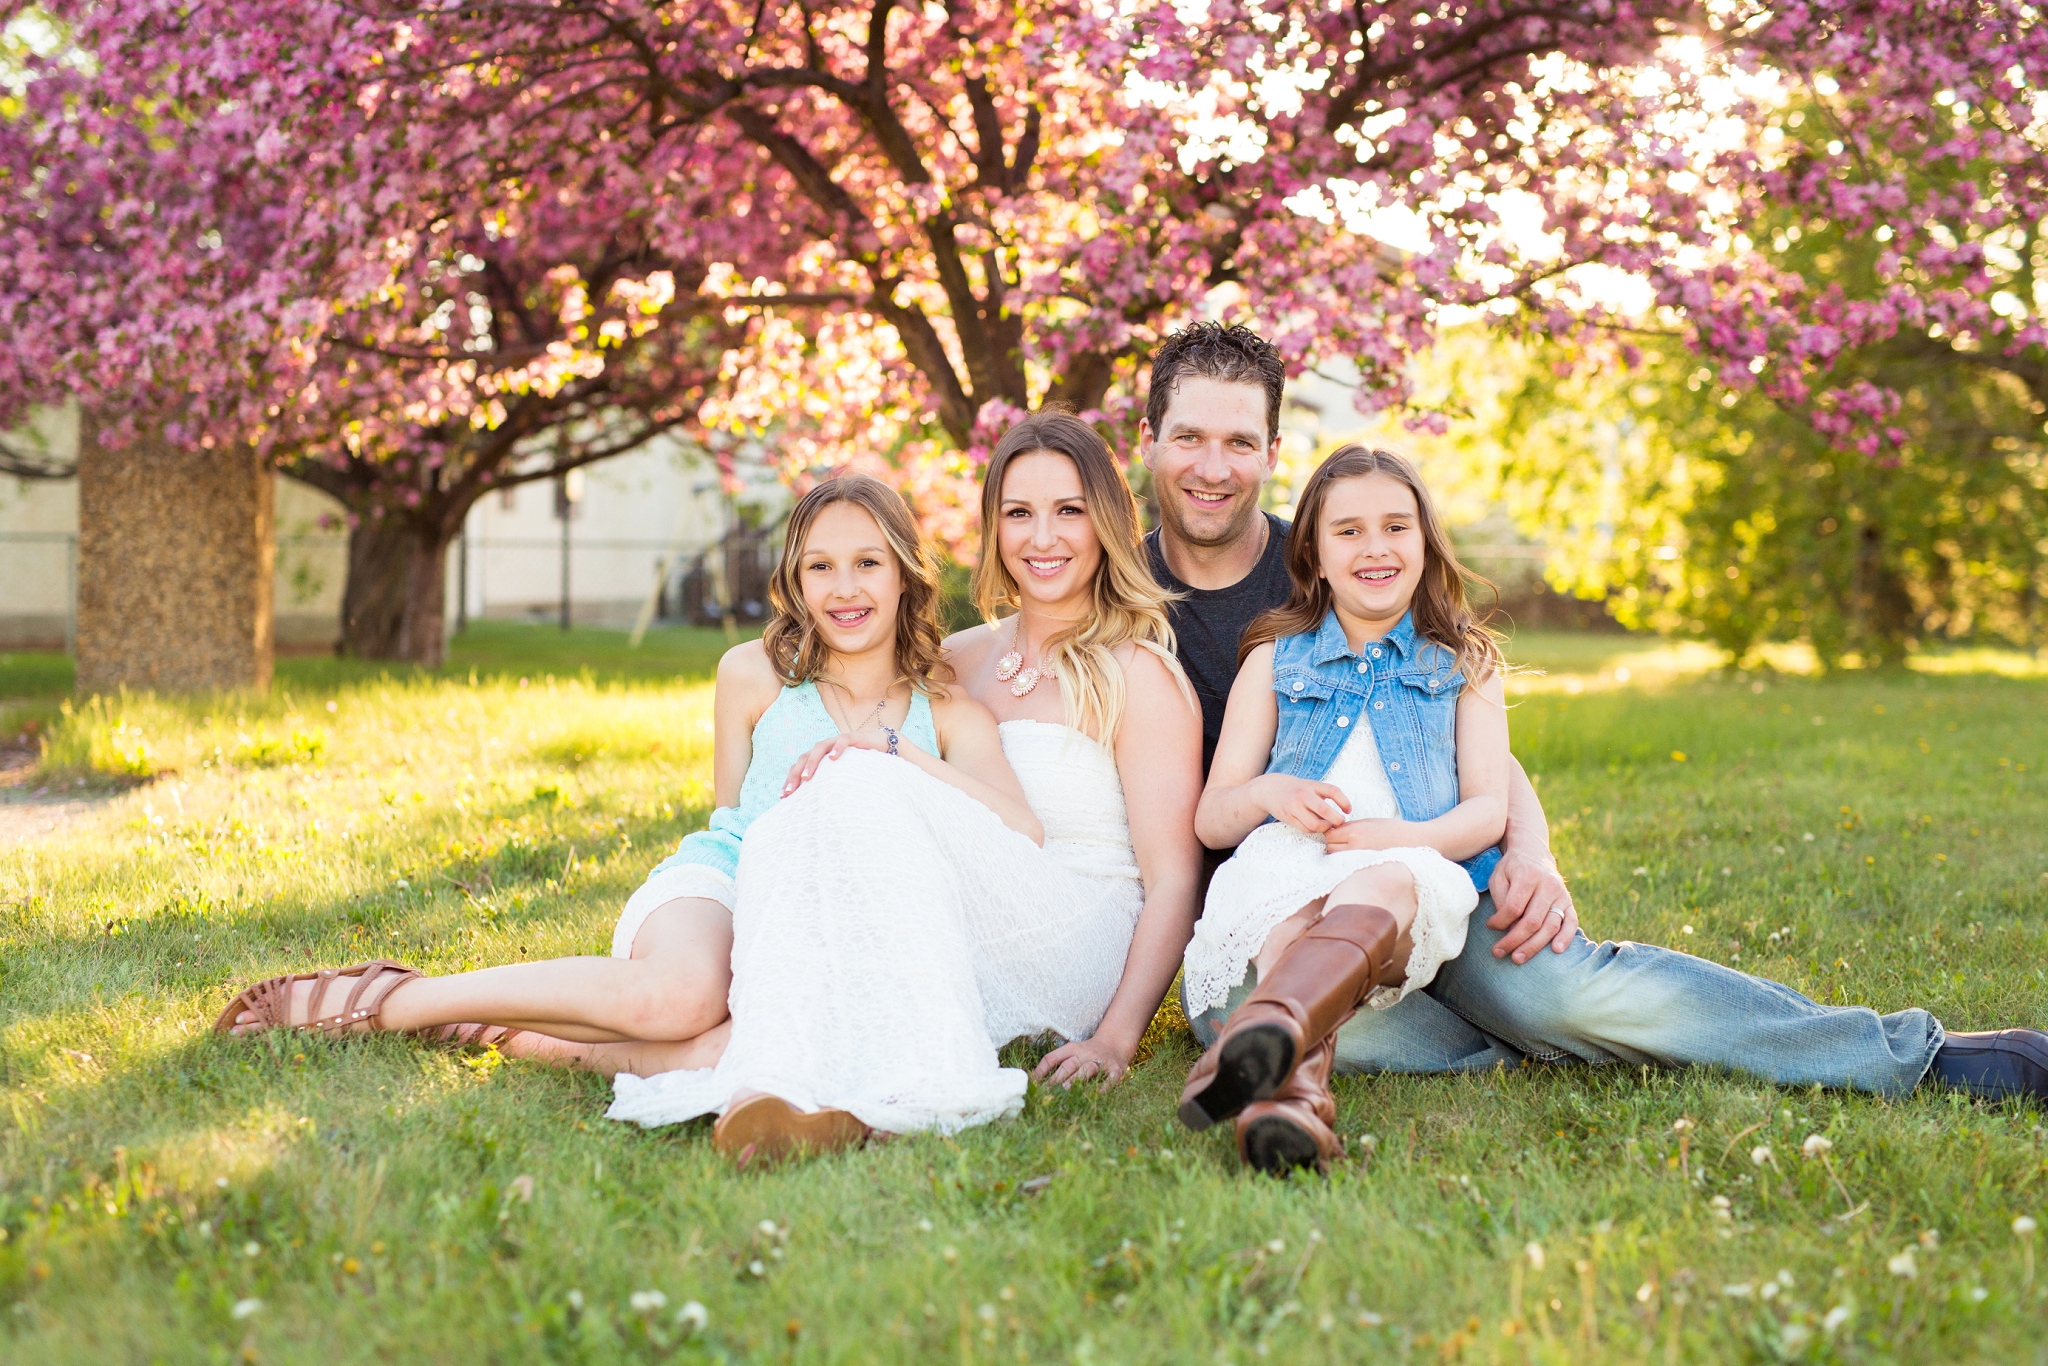 edmonton cherry blossom family photos